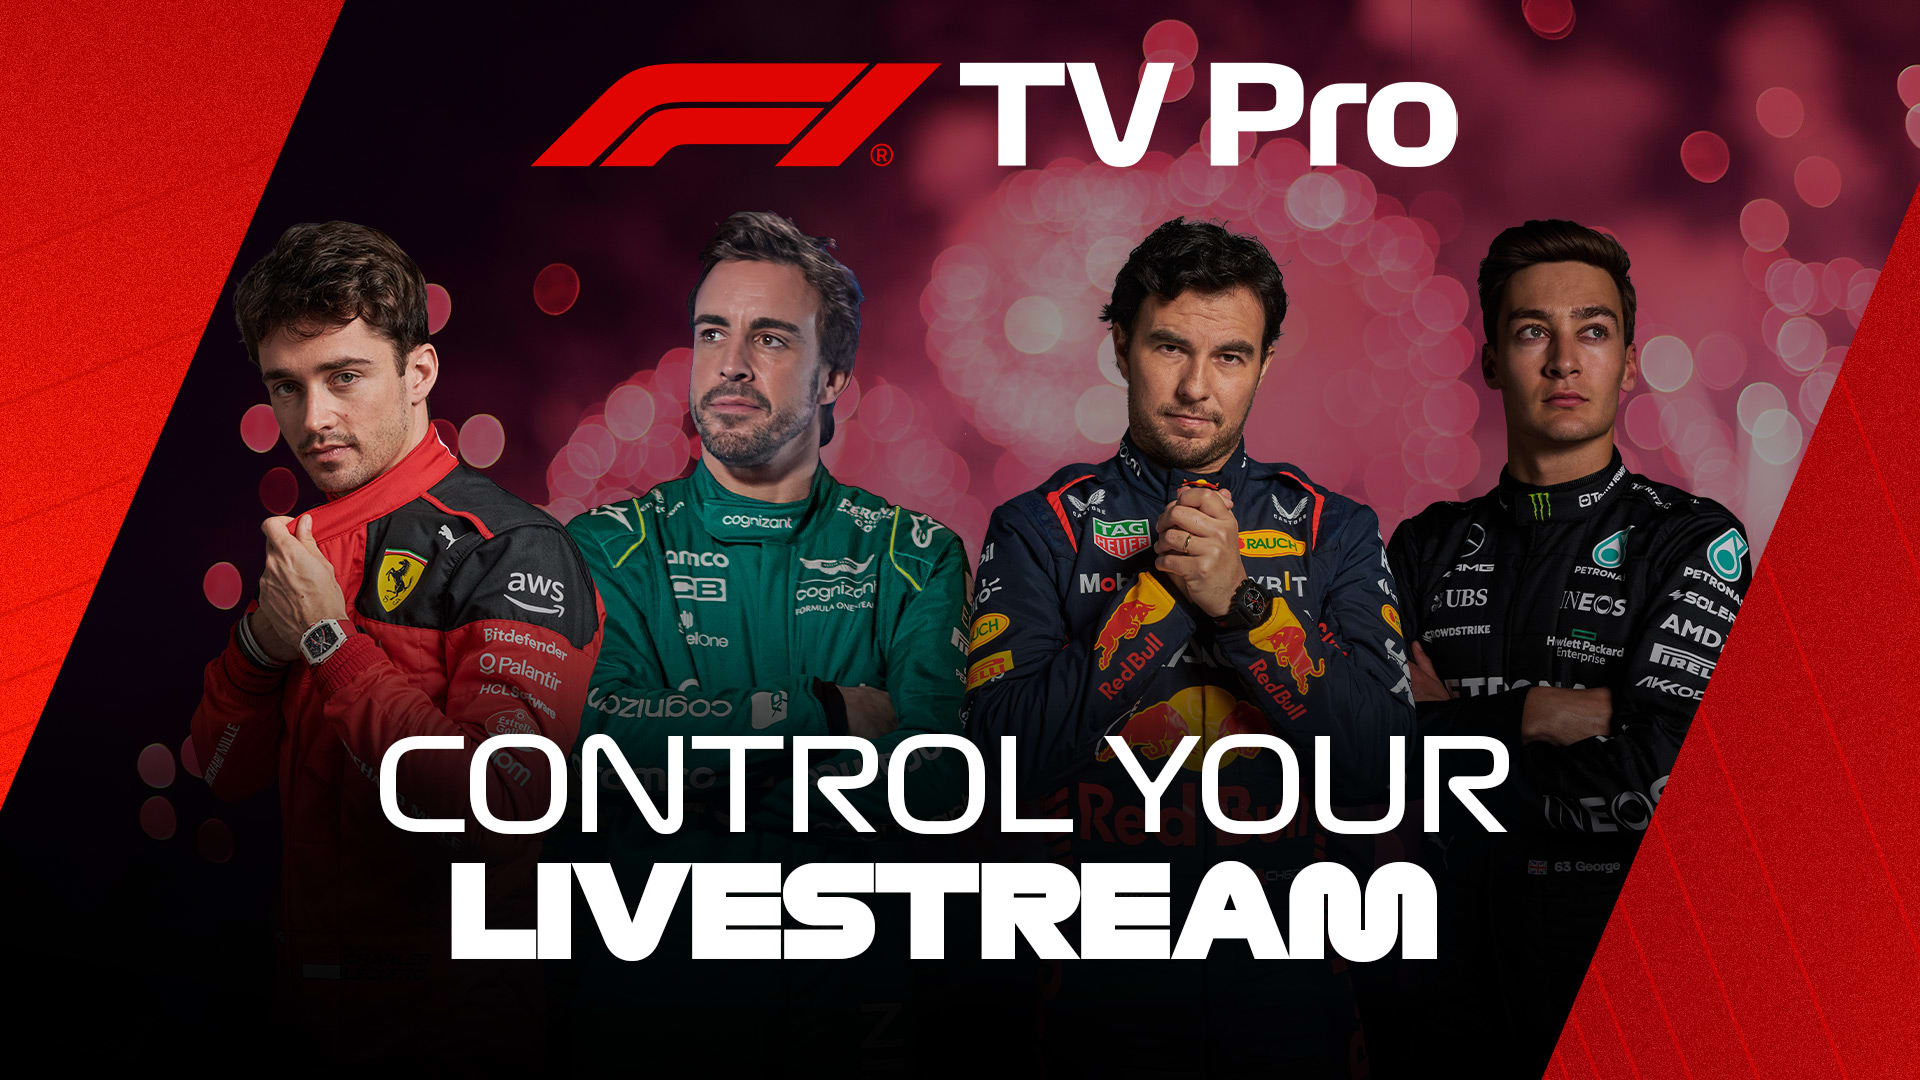 How to stream the 2023 British Grand Prix on F1 TV Pro Formula 1®